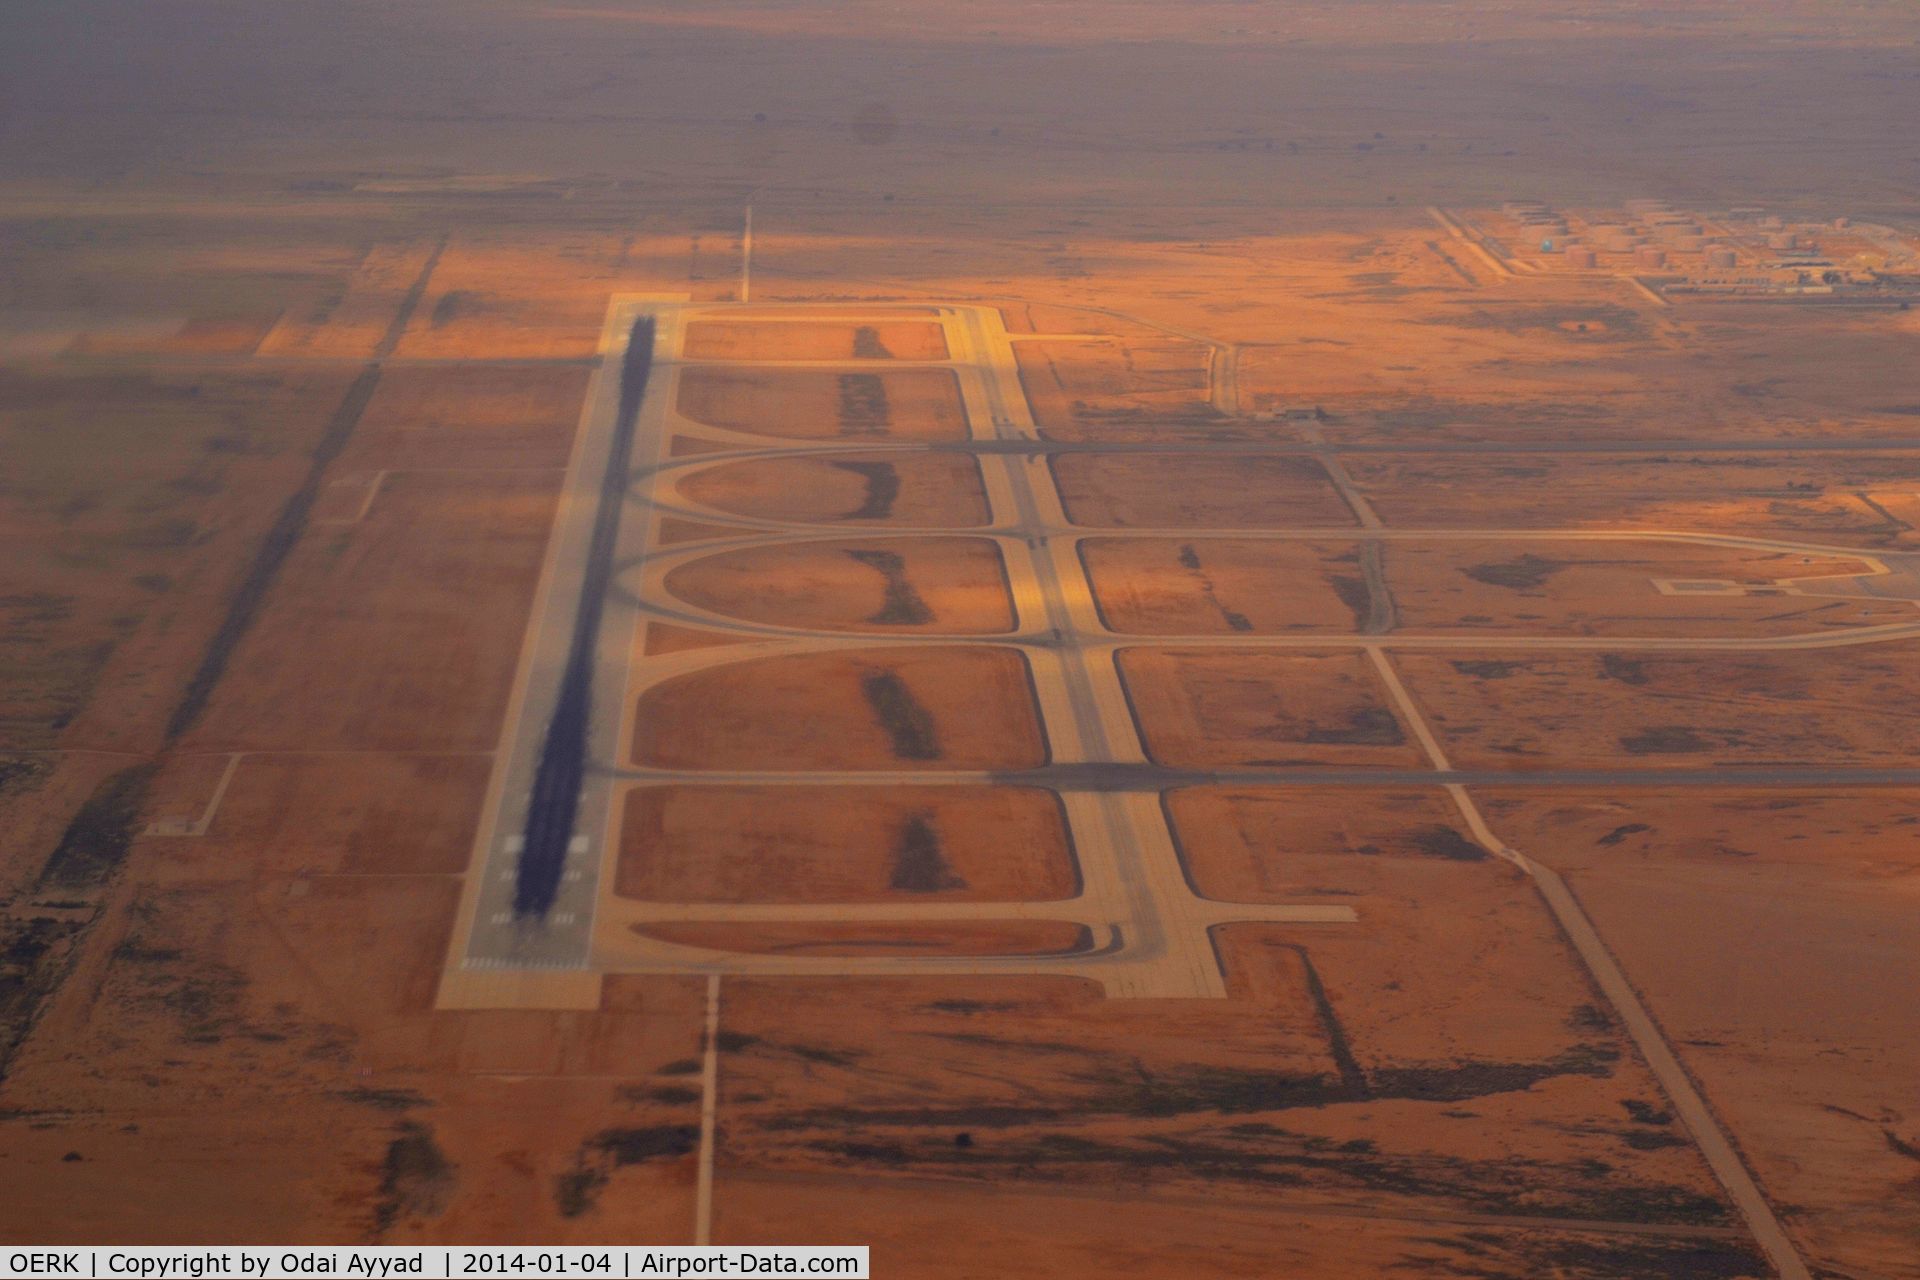 King Khalid International Airport, Riyadh Saudi Arabia (OERK) - just after takeoff a view for runway 33L at riyadh airport , 